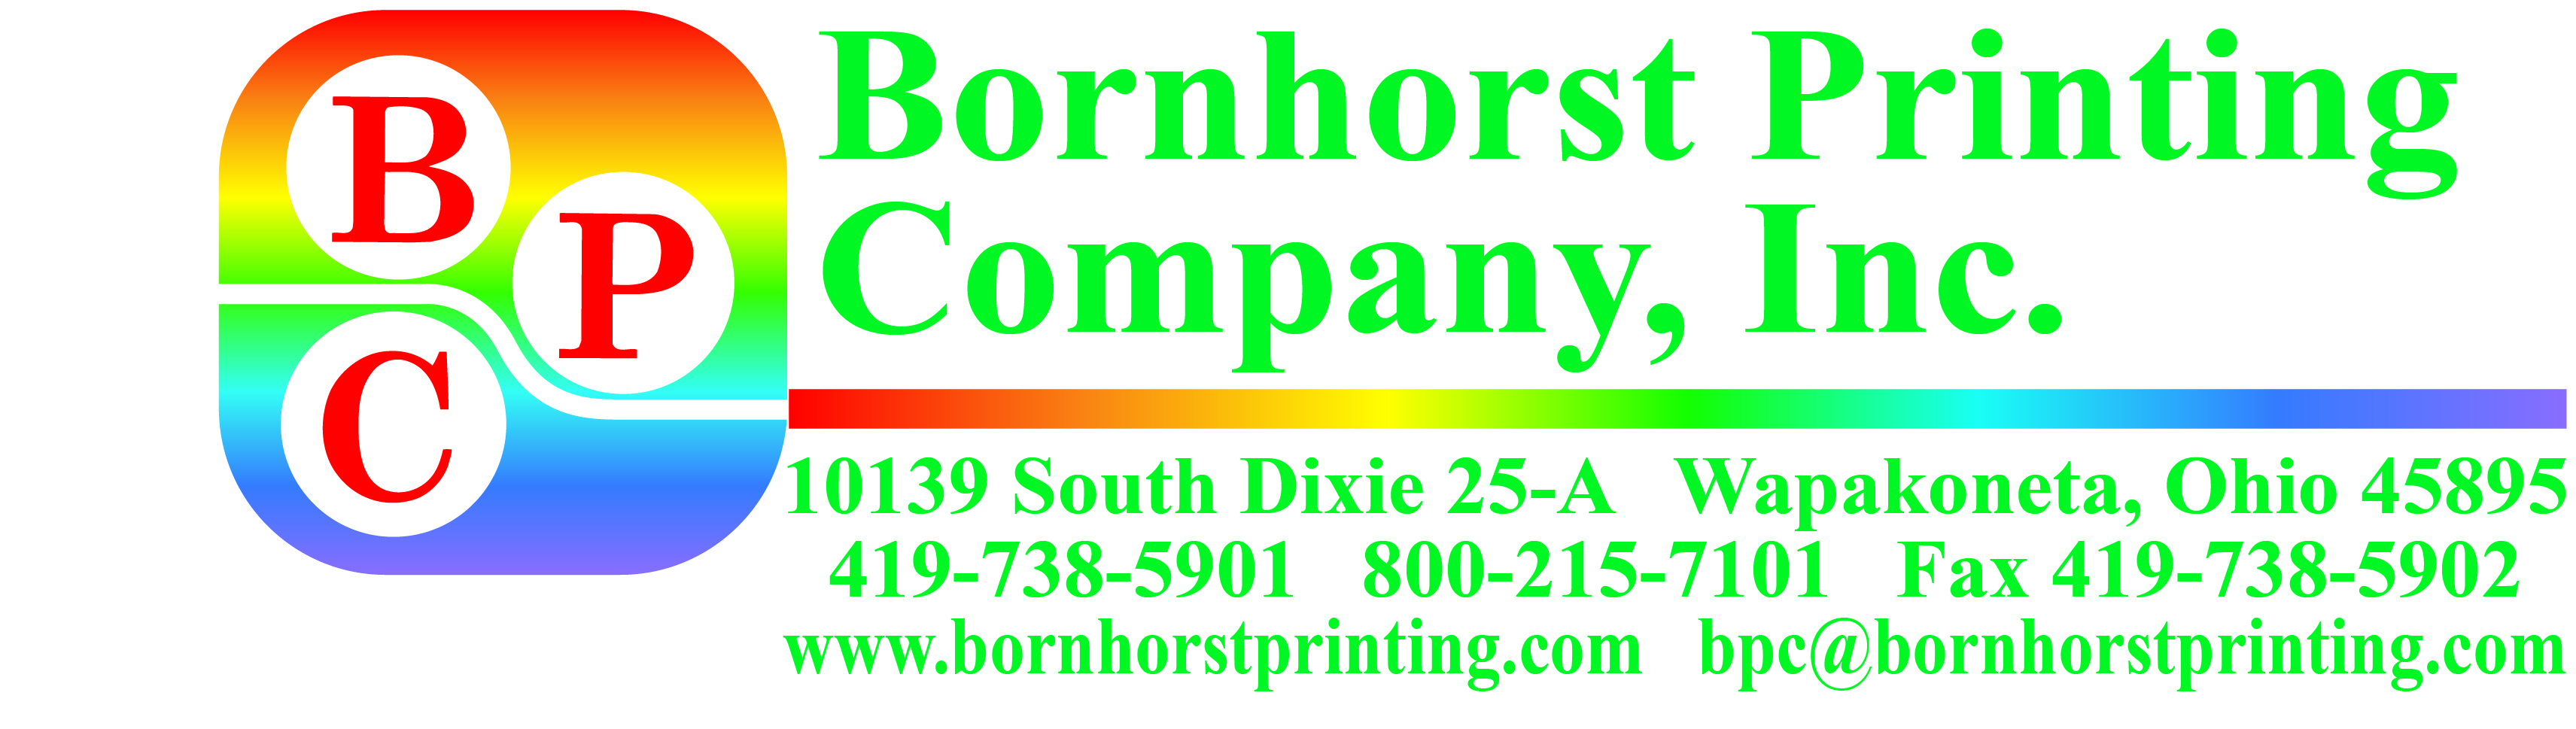 Bornhorst Printing Co Inc's Logo